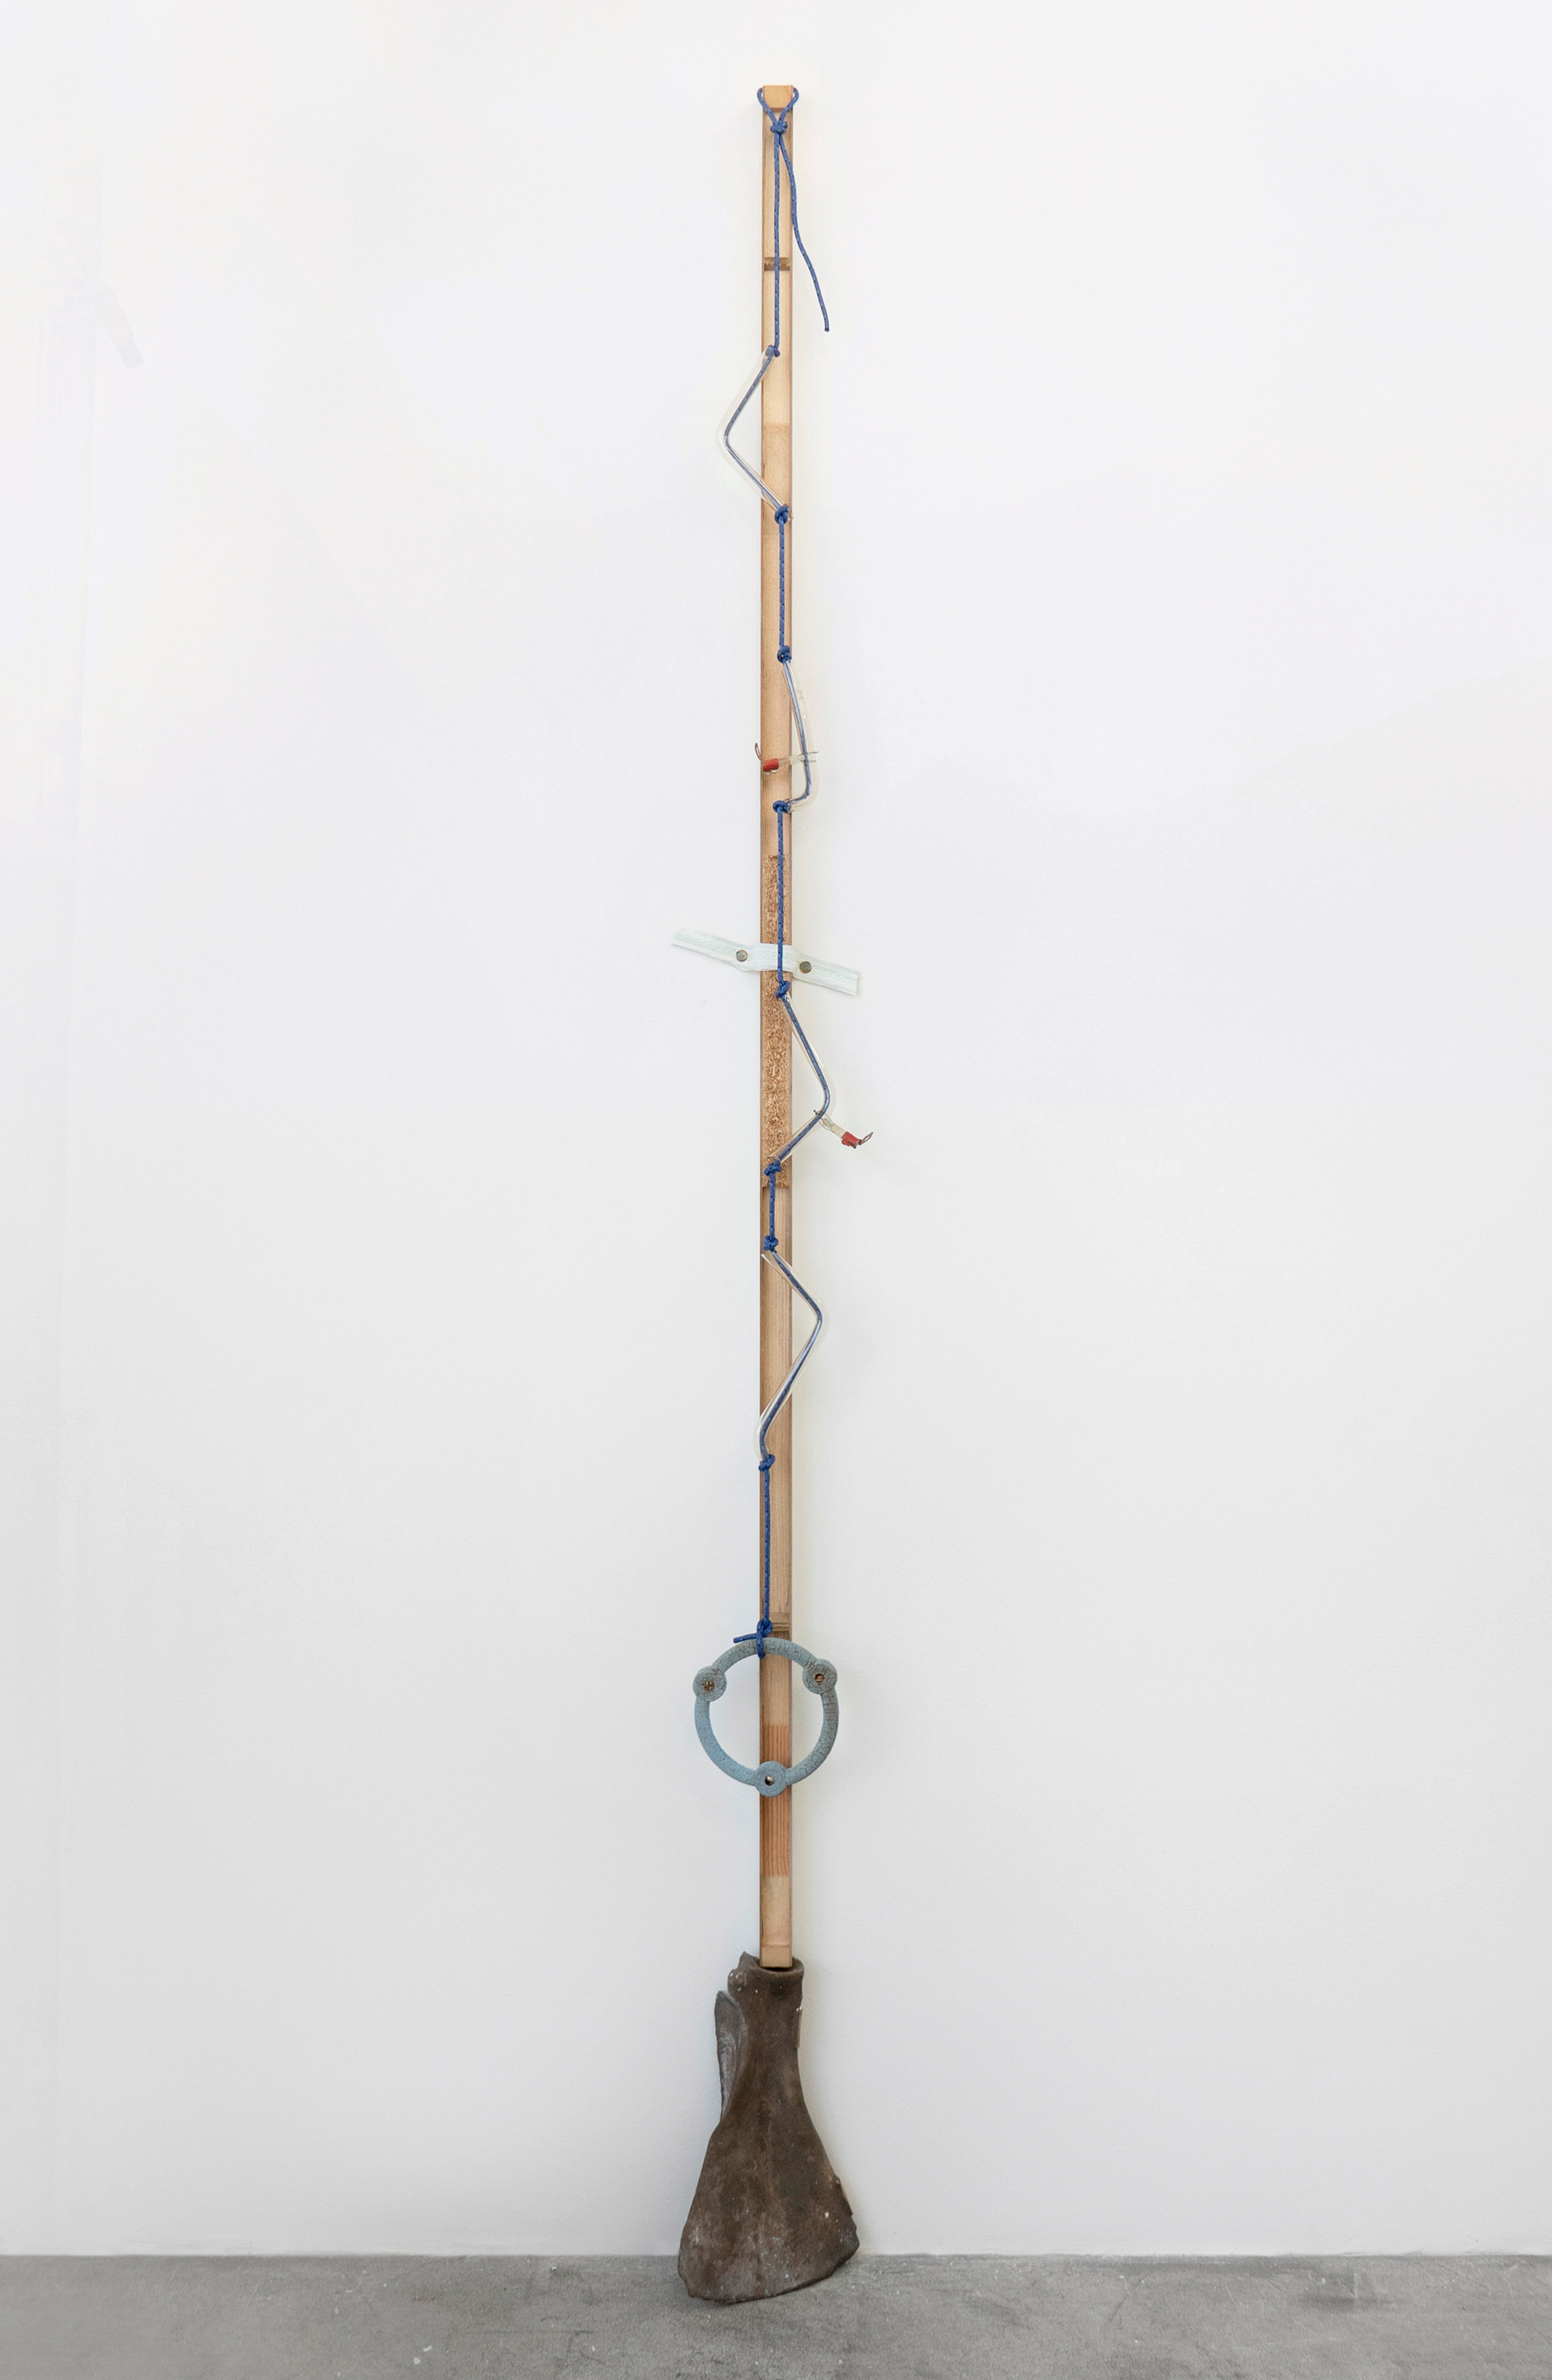  Matt Siegel,  E , 2018, Raw bronze, hollow core door, accessory cord, neon glass tubing (sourced: abandoned China Buffet, Evanston, WY), found object, fire, 92 x 8 x 5 in 